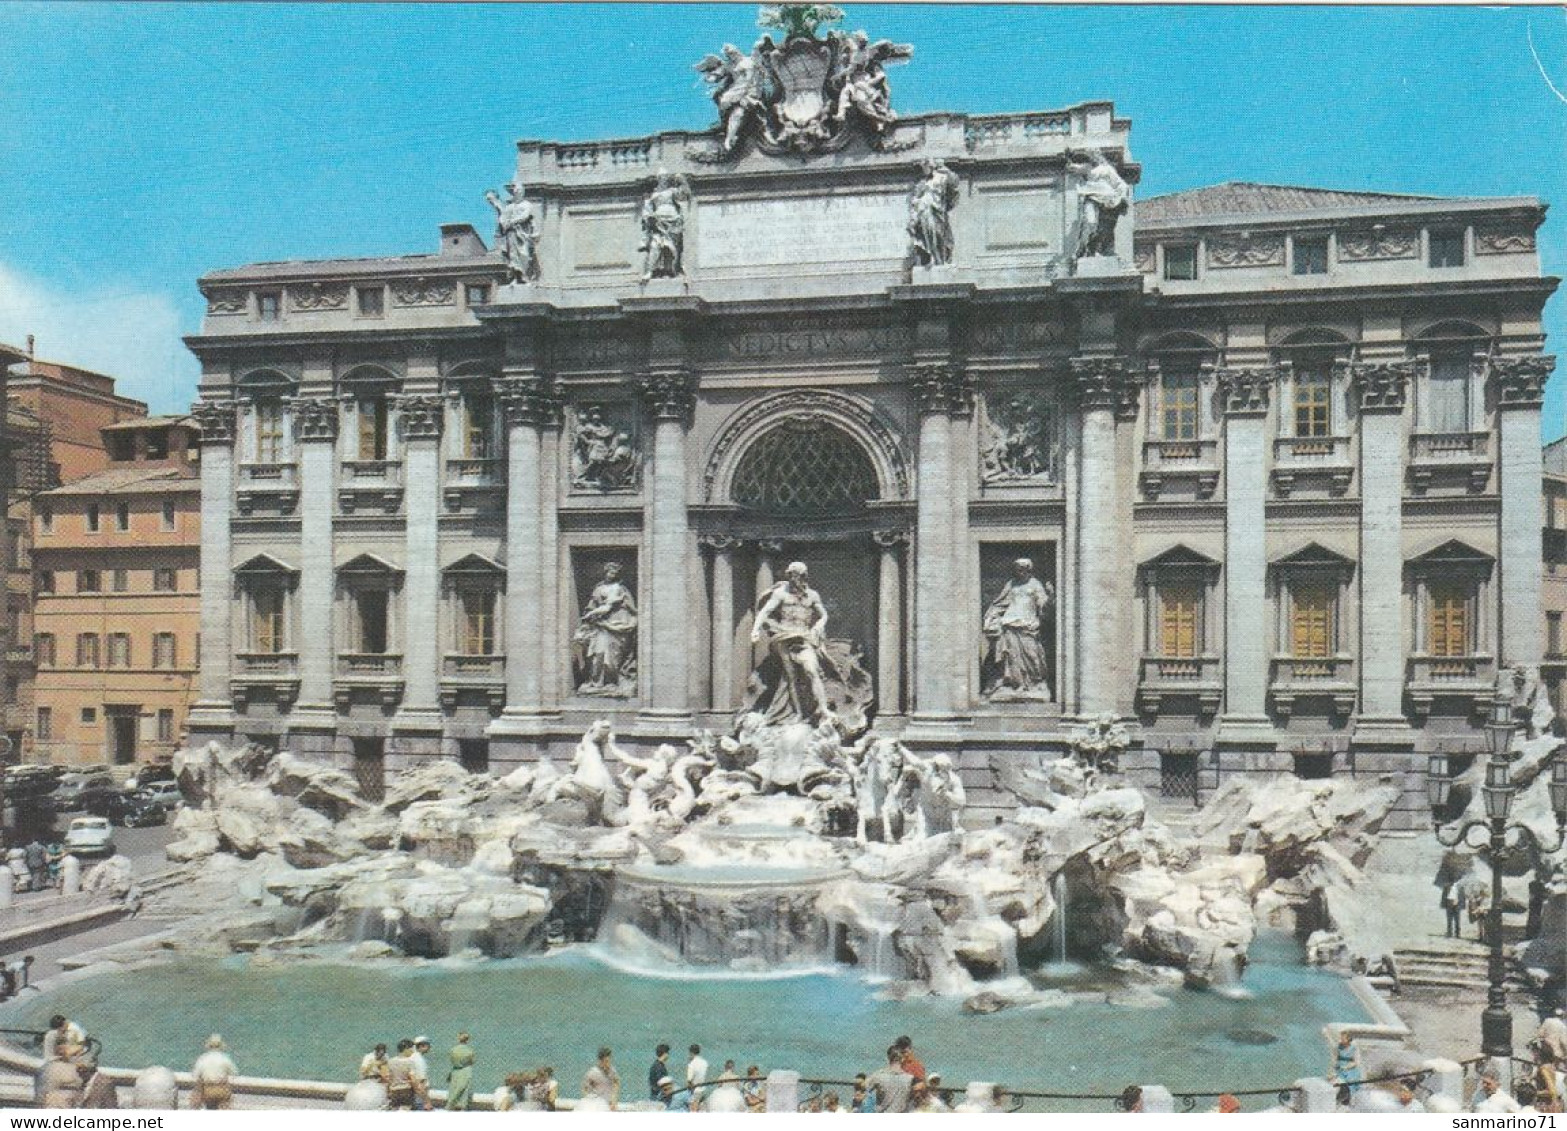 POSTCARD 1409,Italy,Roma,Rim - Fontana Di Trevi